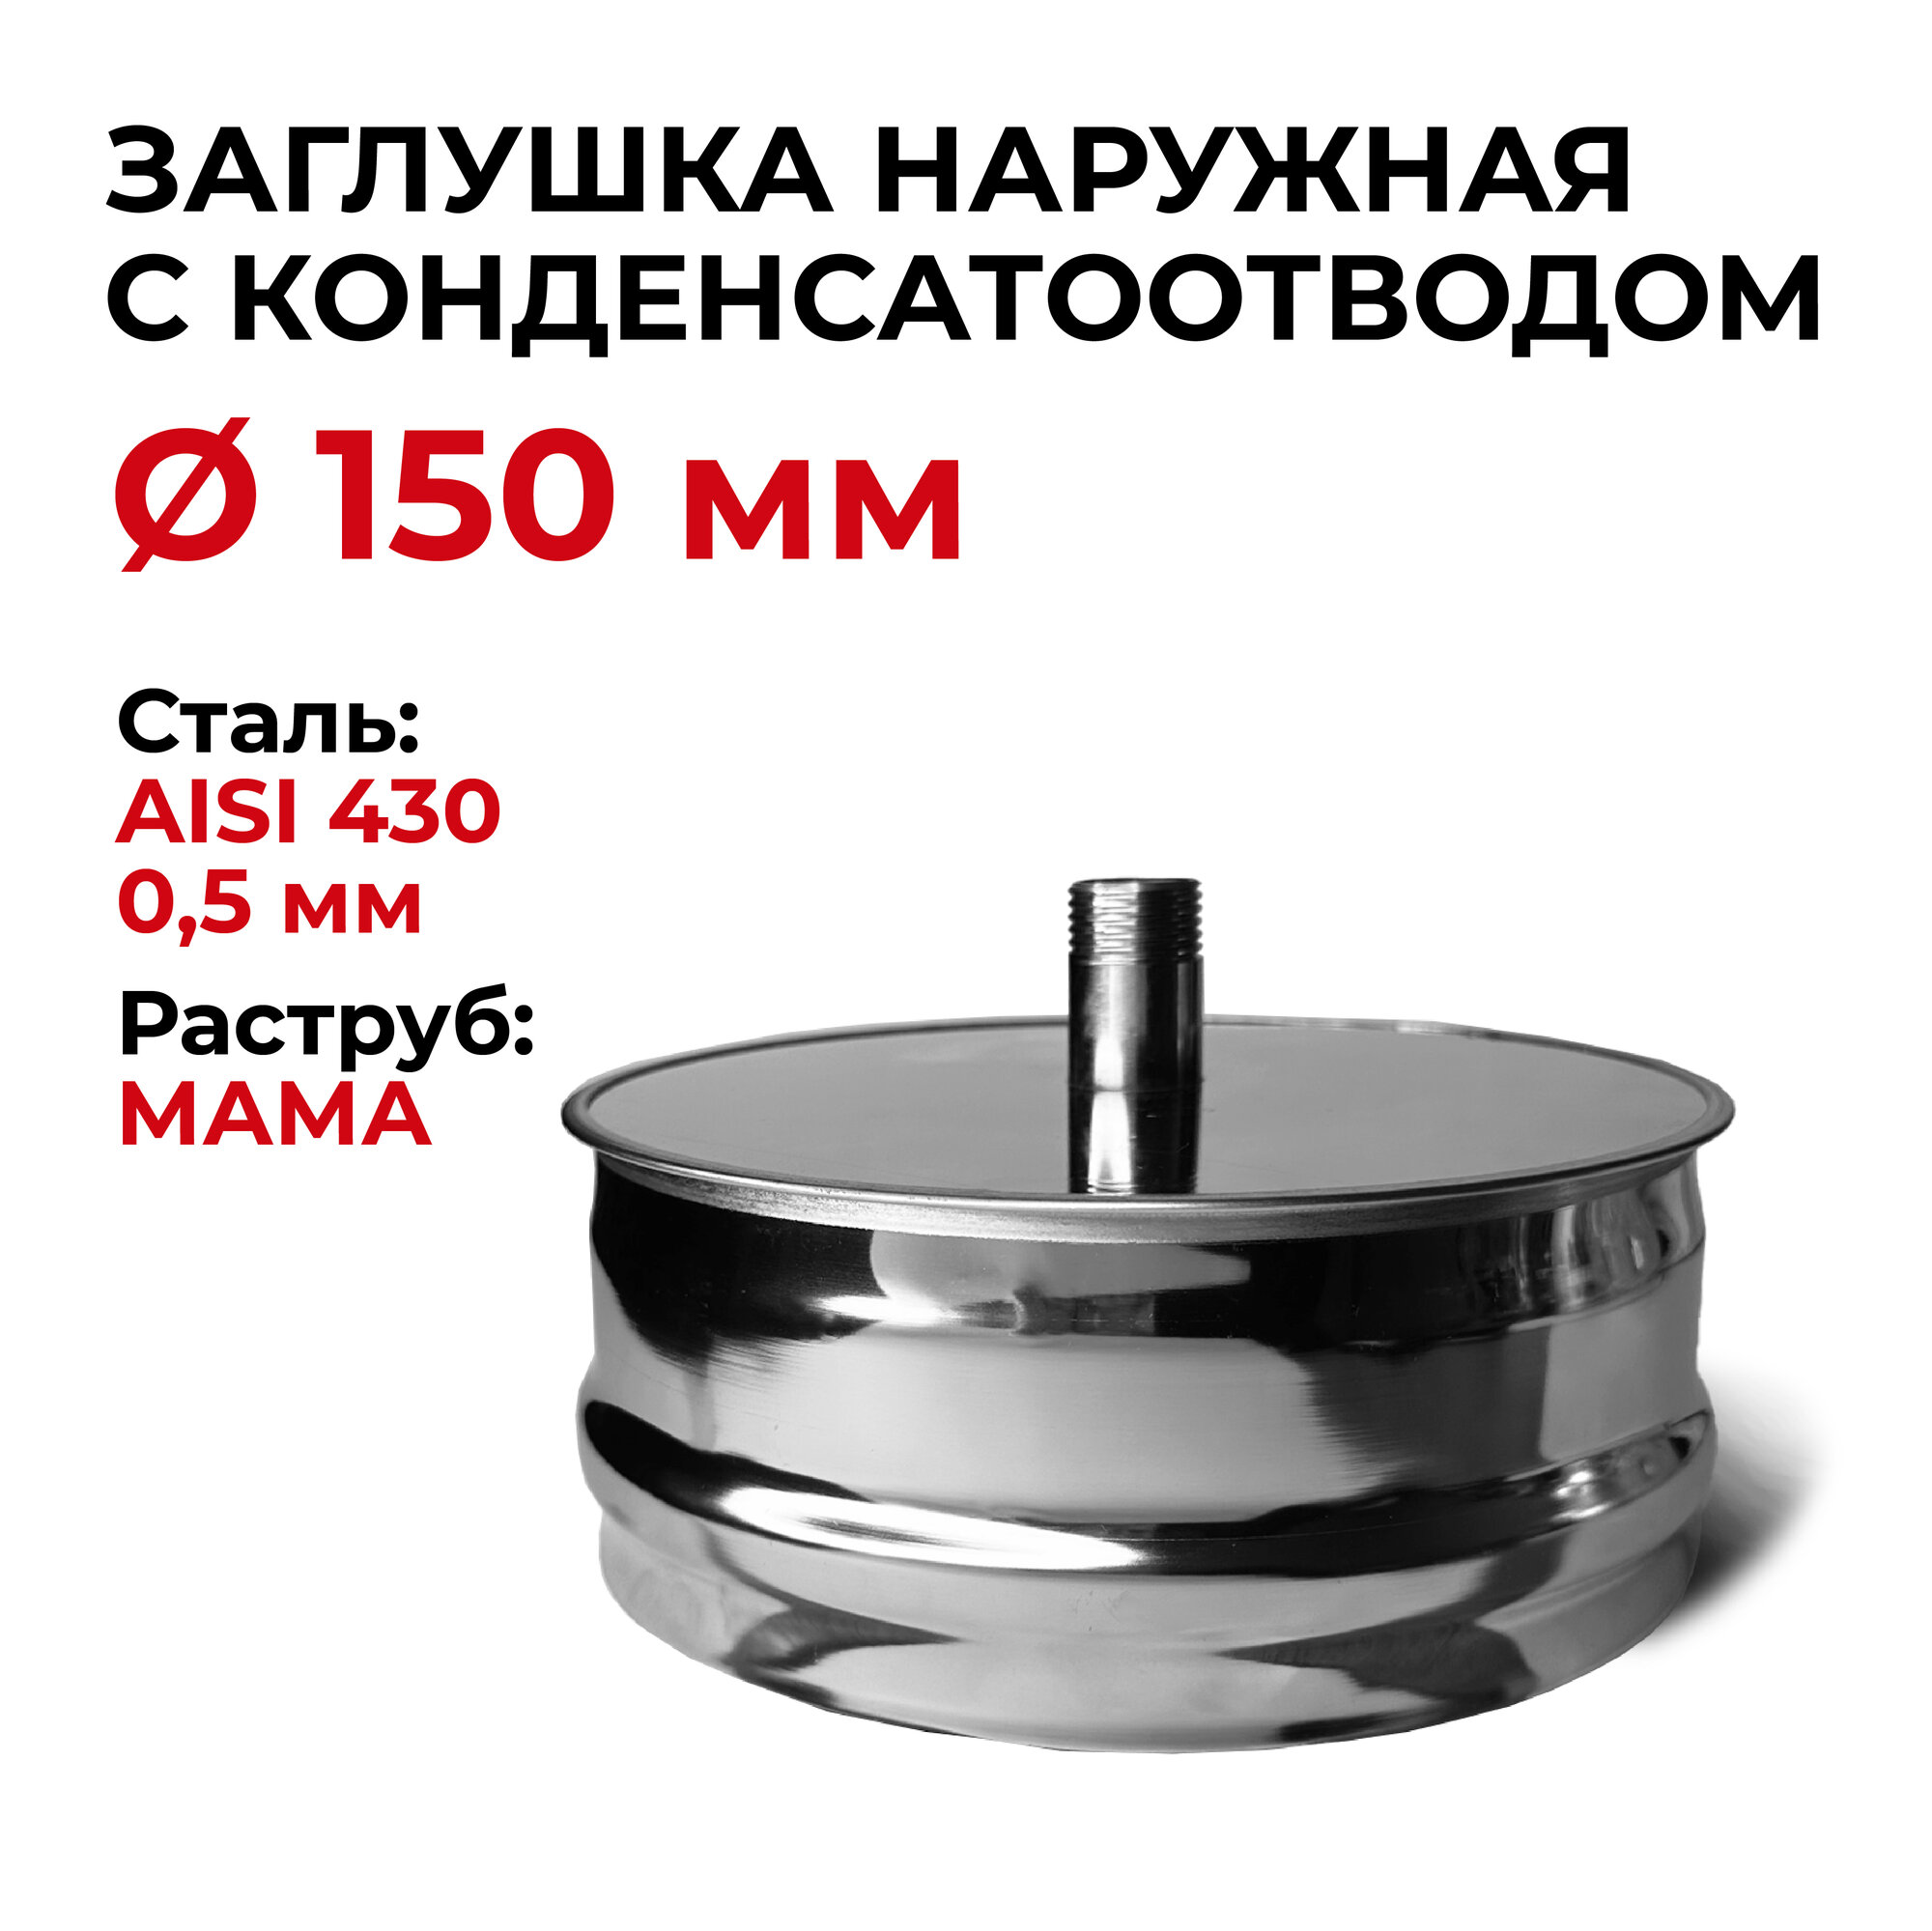 Заглушка для ревизии с конденсатоотводом 1/2 наружная мама D 150 мм "Прок"